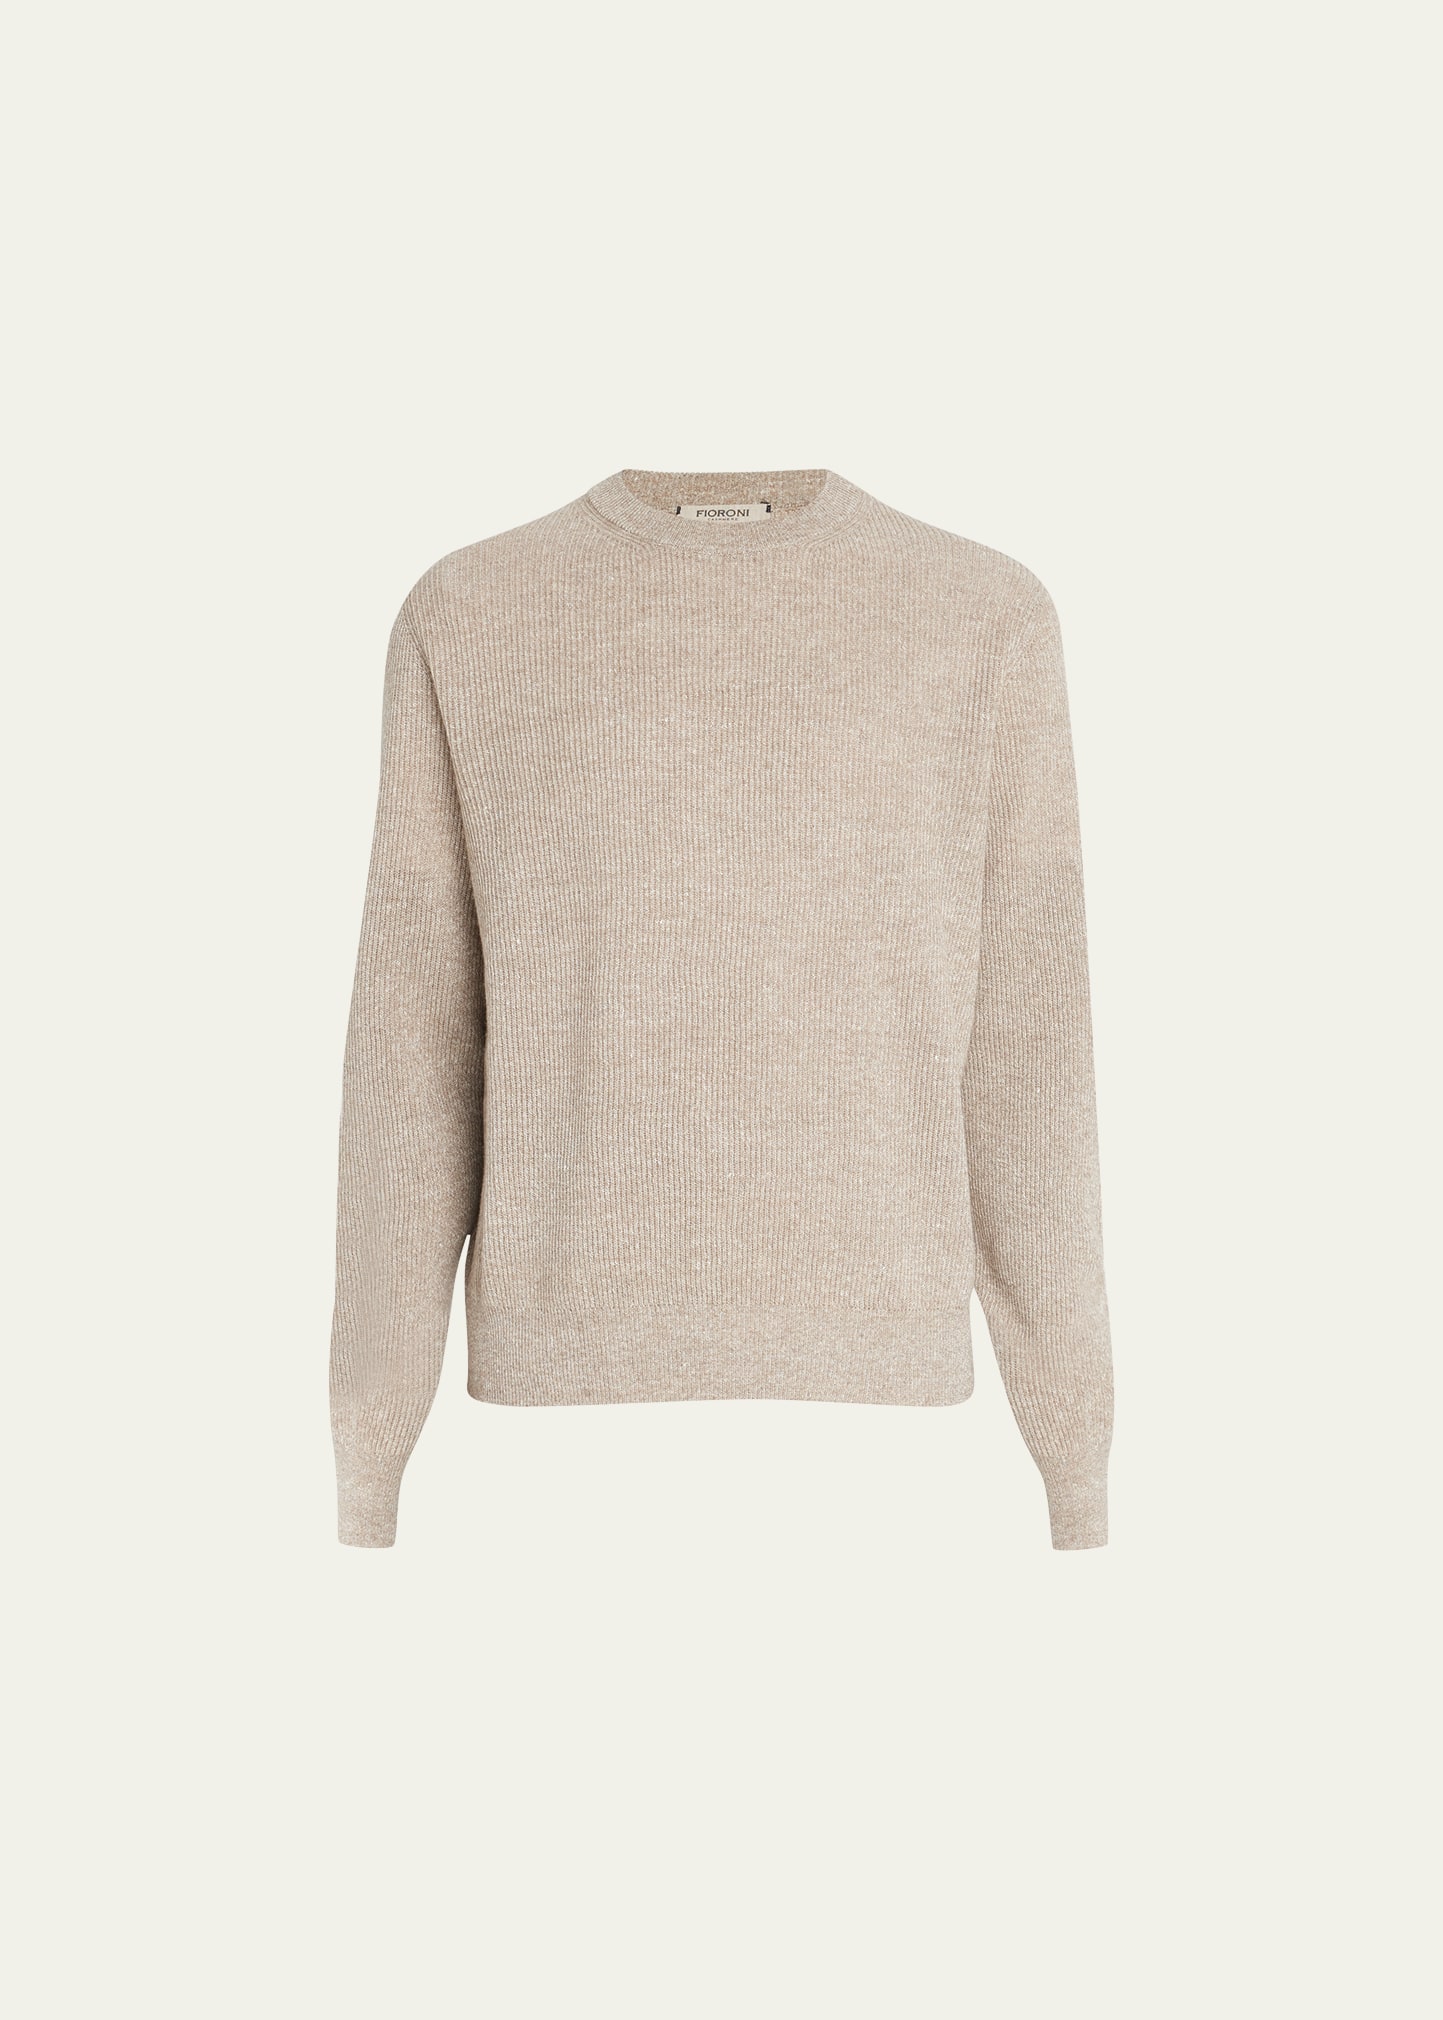 Fioroni Men's Cashmere-Linen Crewneck Sweater